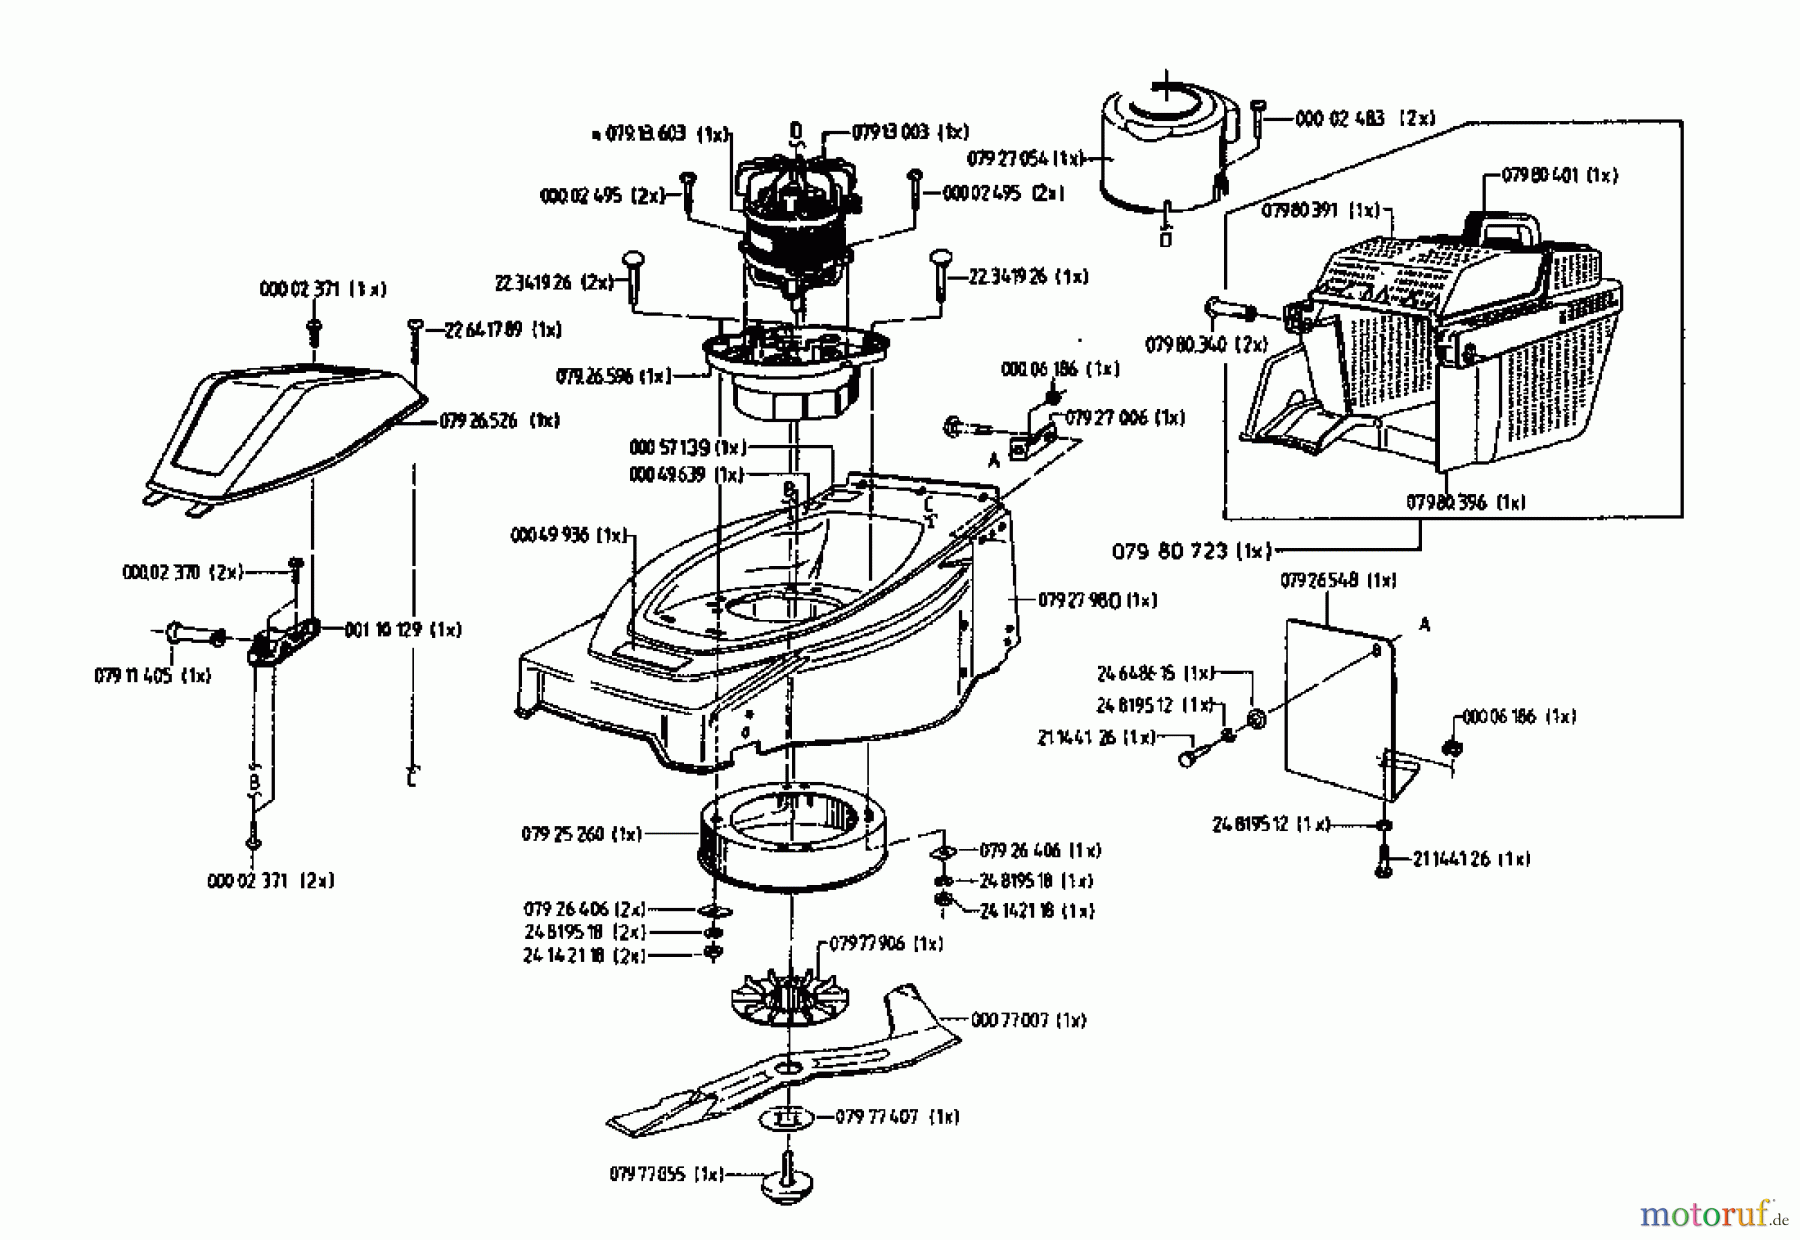  Gutbrod Electric mower HE 42 04030.01  (1996) Basic machine